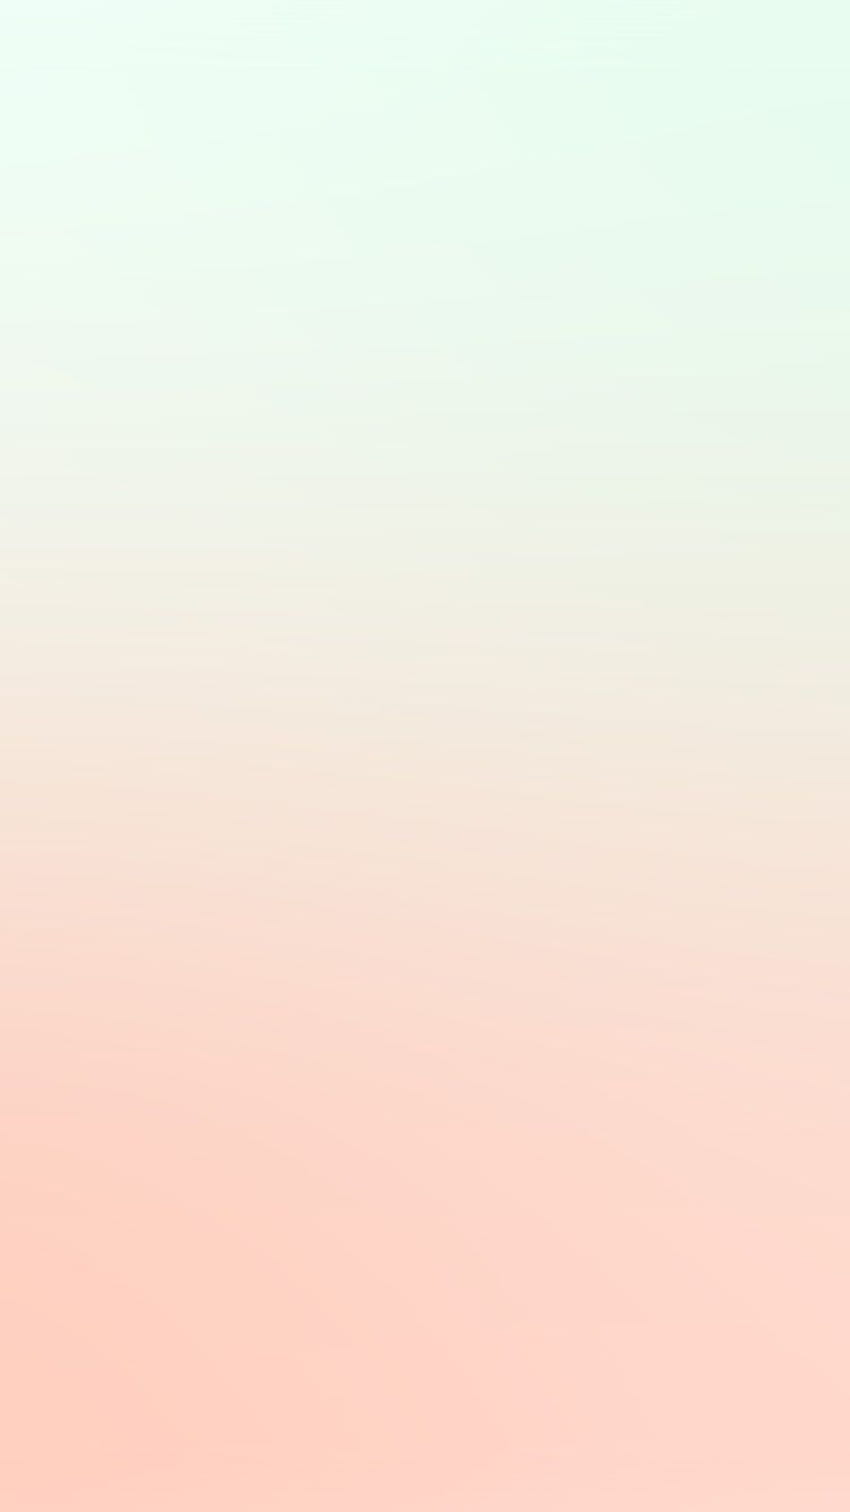 SOFT PASTEL SKY BLUR GRADATION IPHONE. Latar belakang, Palet warna, Warna HD phone wallpaper